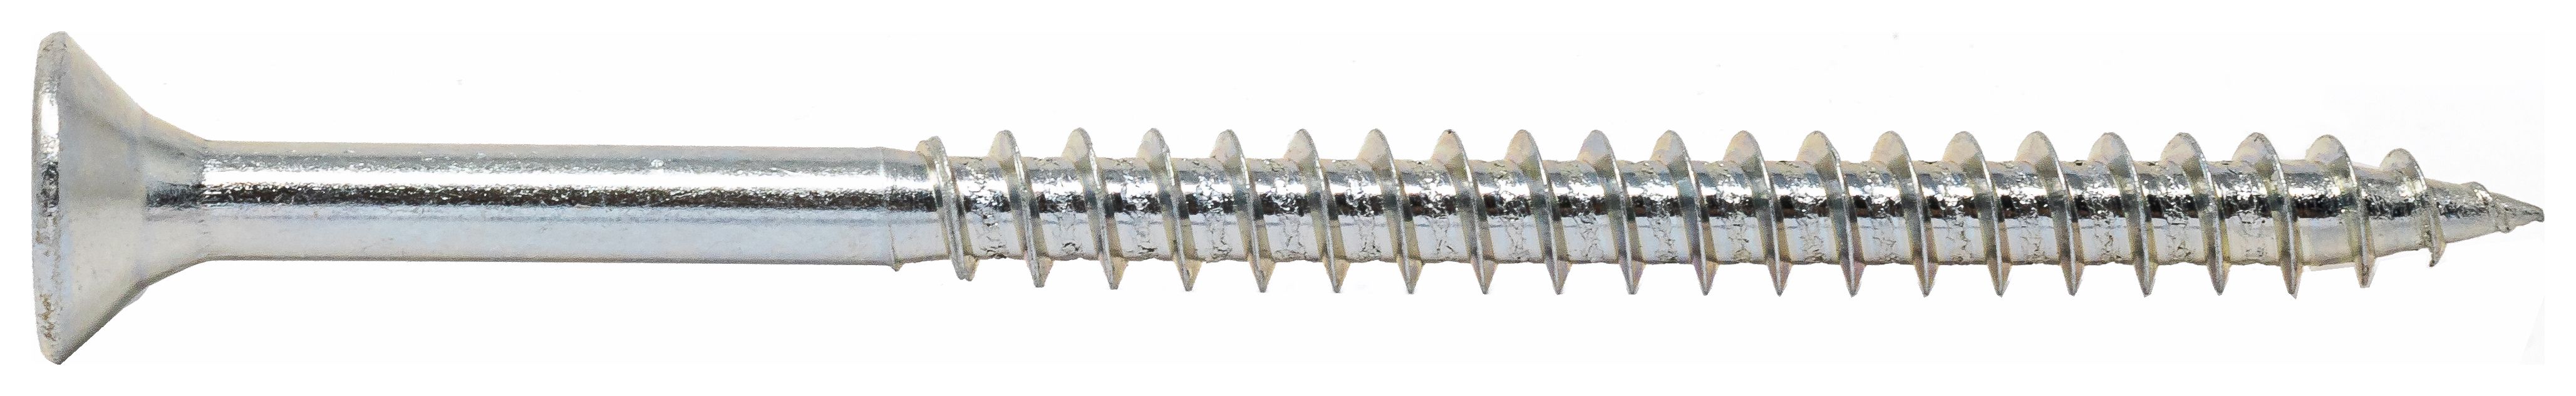 Wickes Single Thread Zinc Plated Screw - 4 X 25mm Pack Of 200